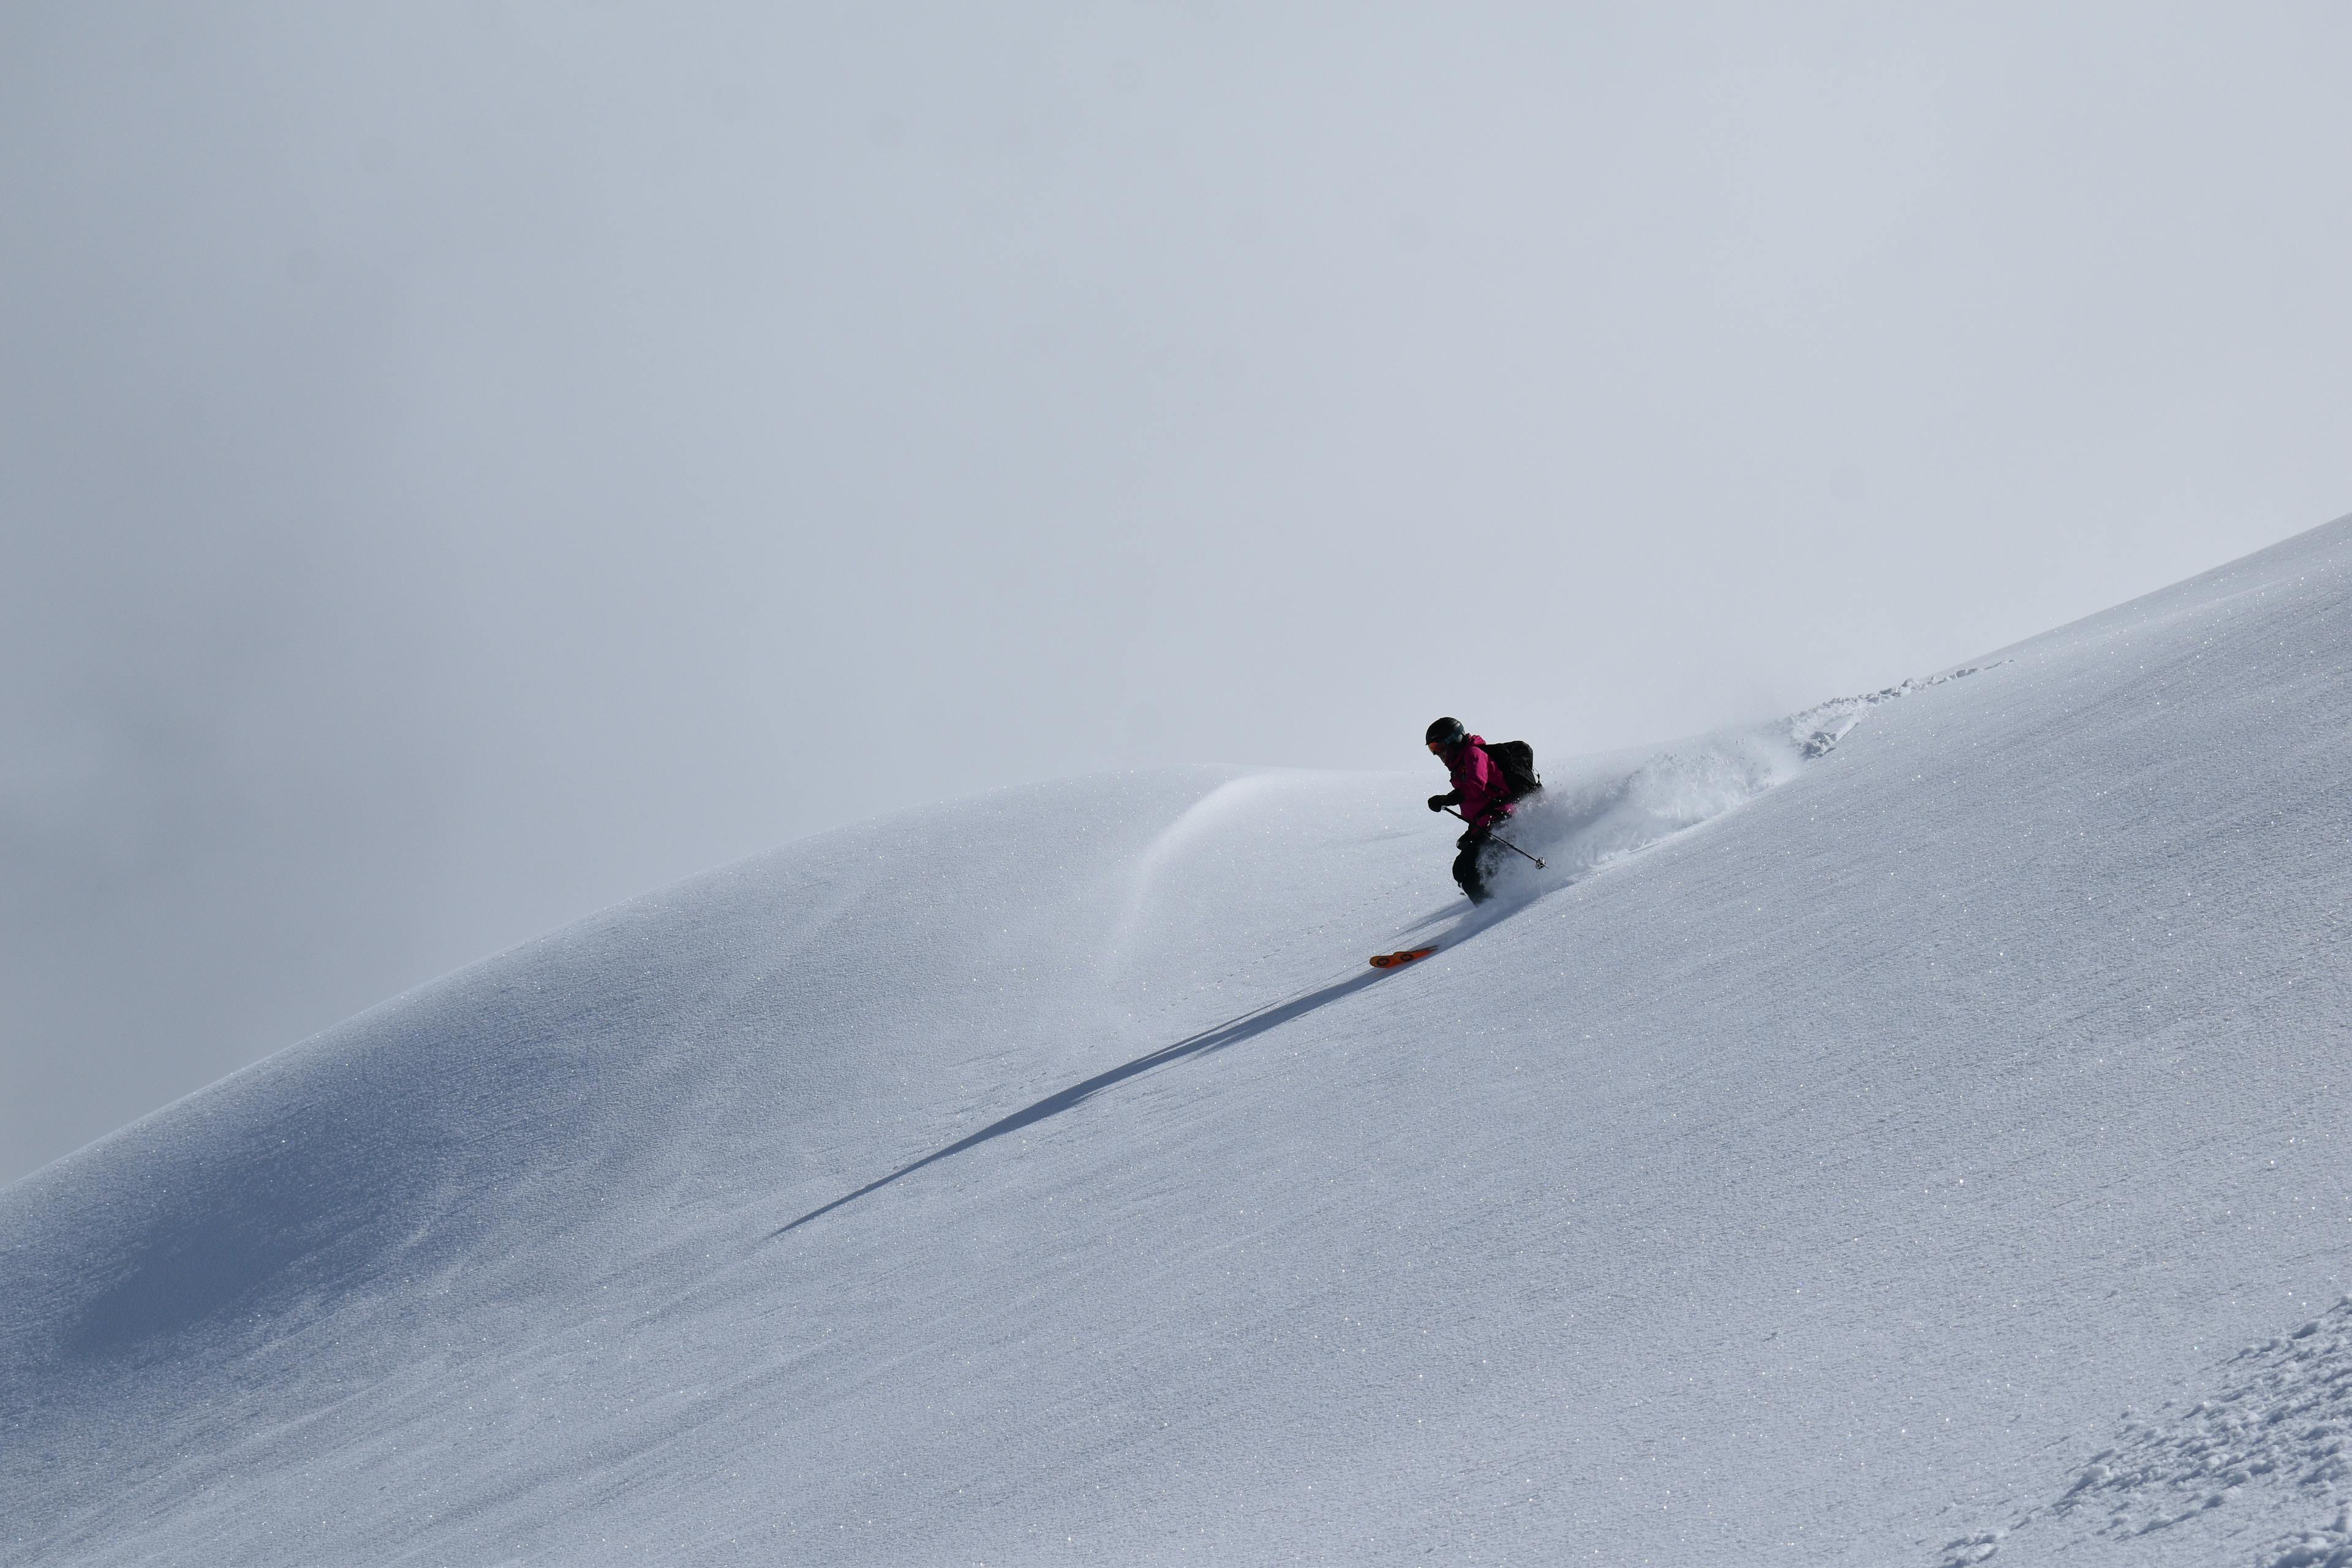 Skiier descending a powder field. 